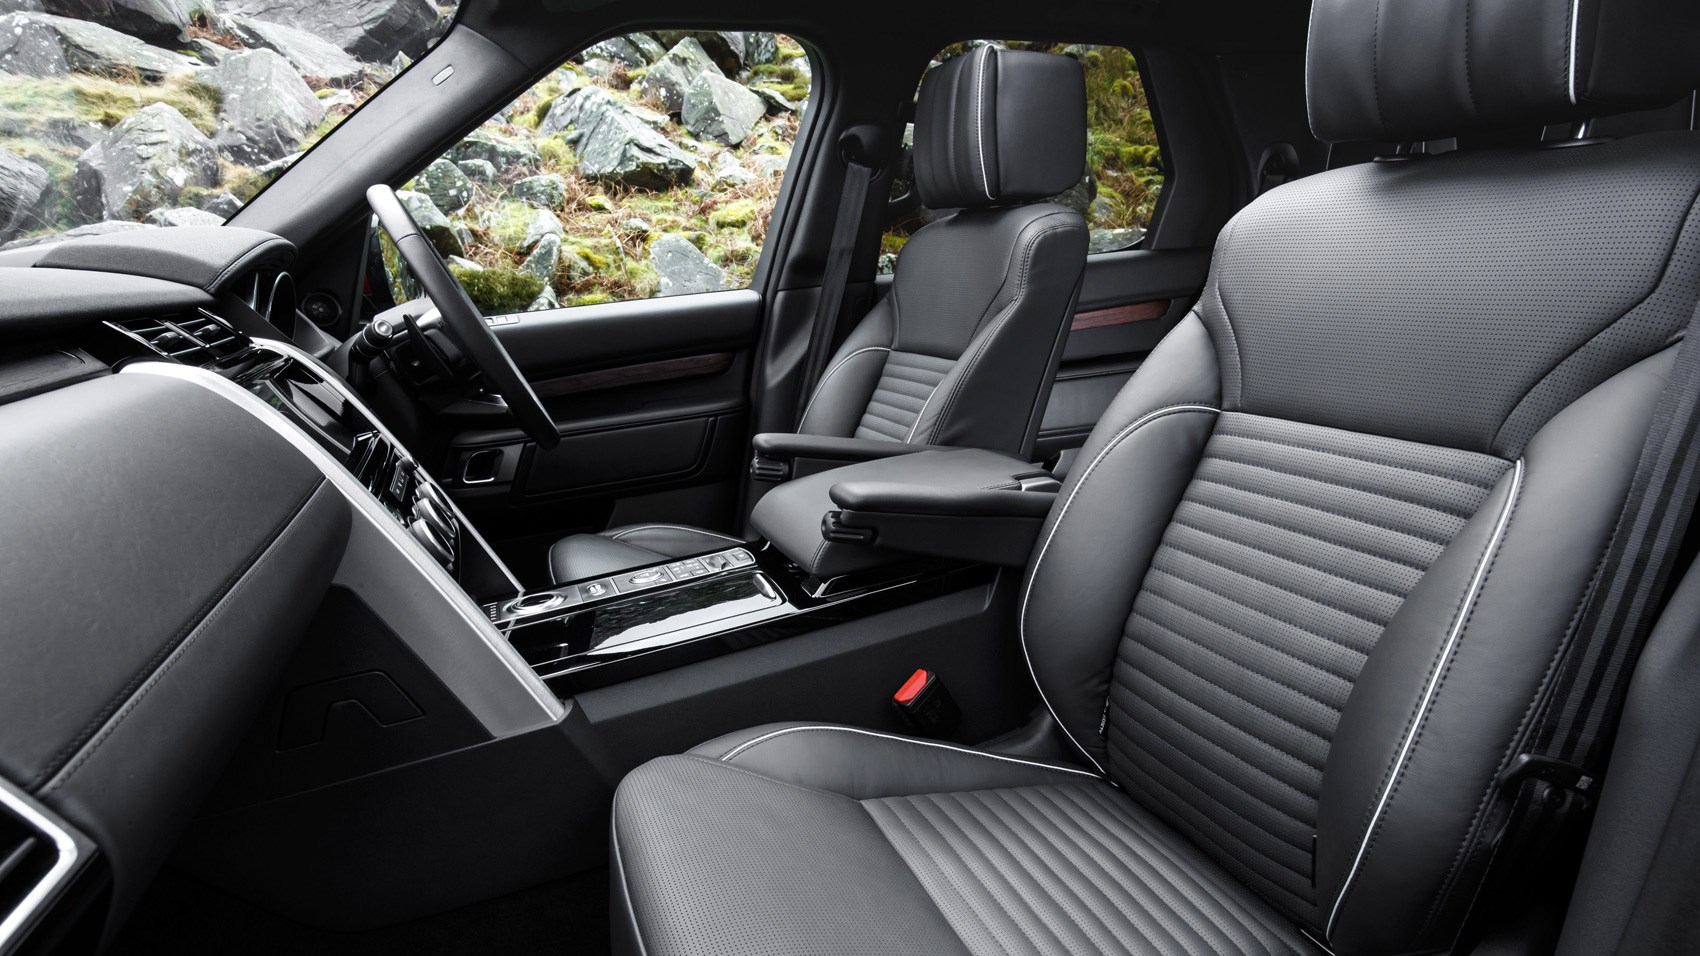 Land Rover Discovery sD4 interior